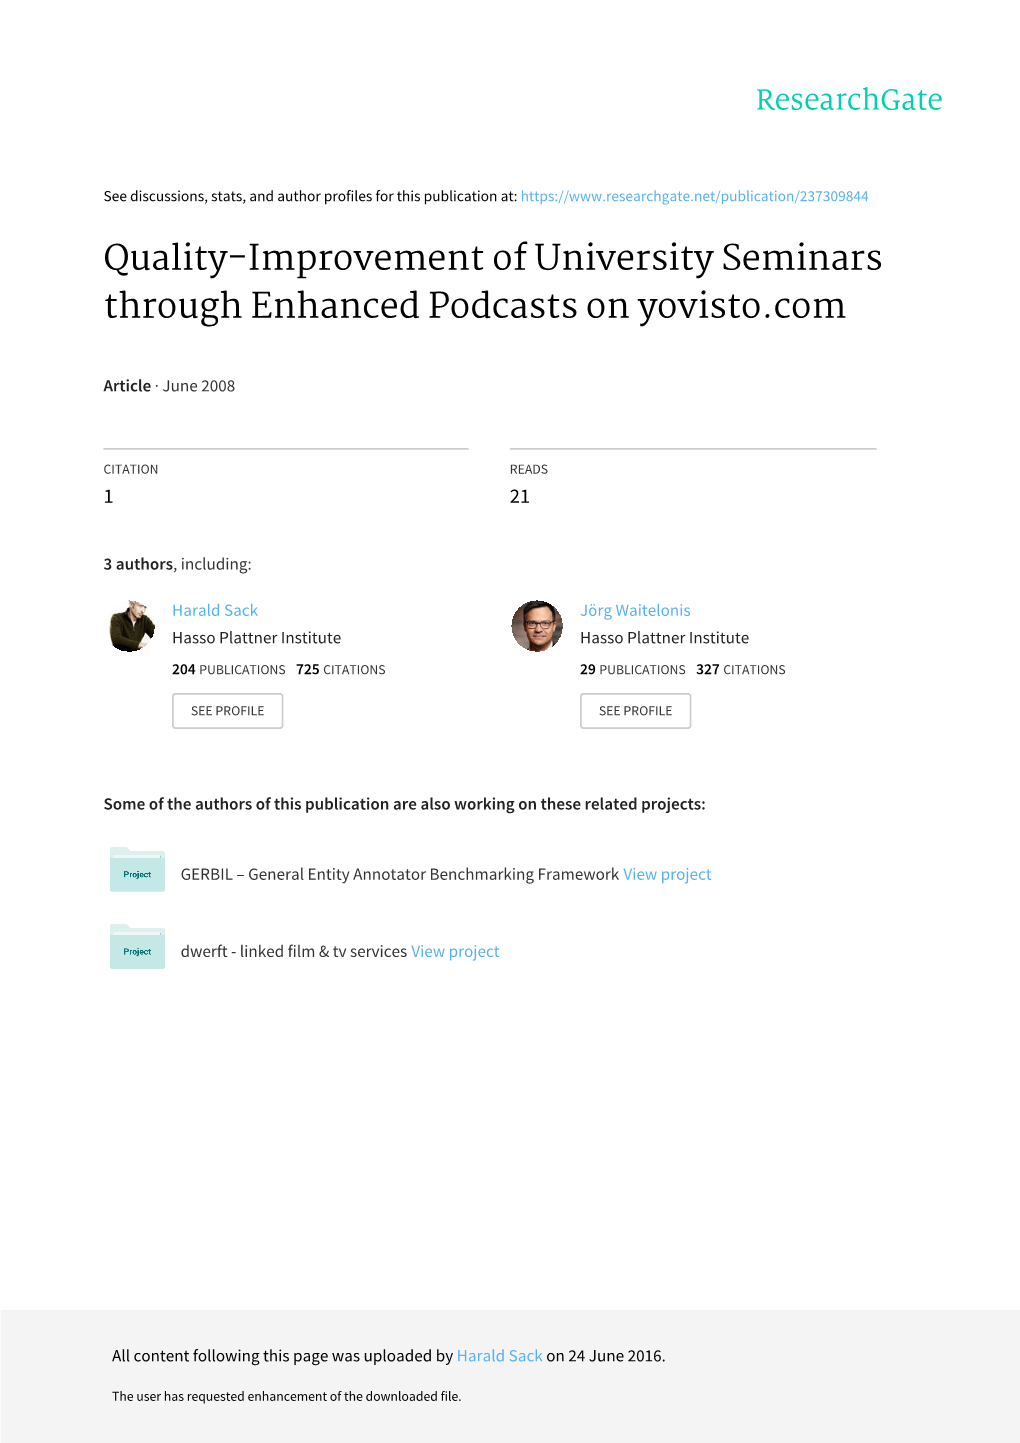 Quality-Improvement of University Seminars Through Enhanced Podcasts on Yovisto.Com